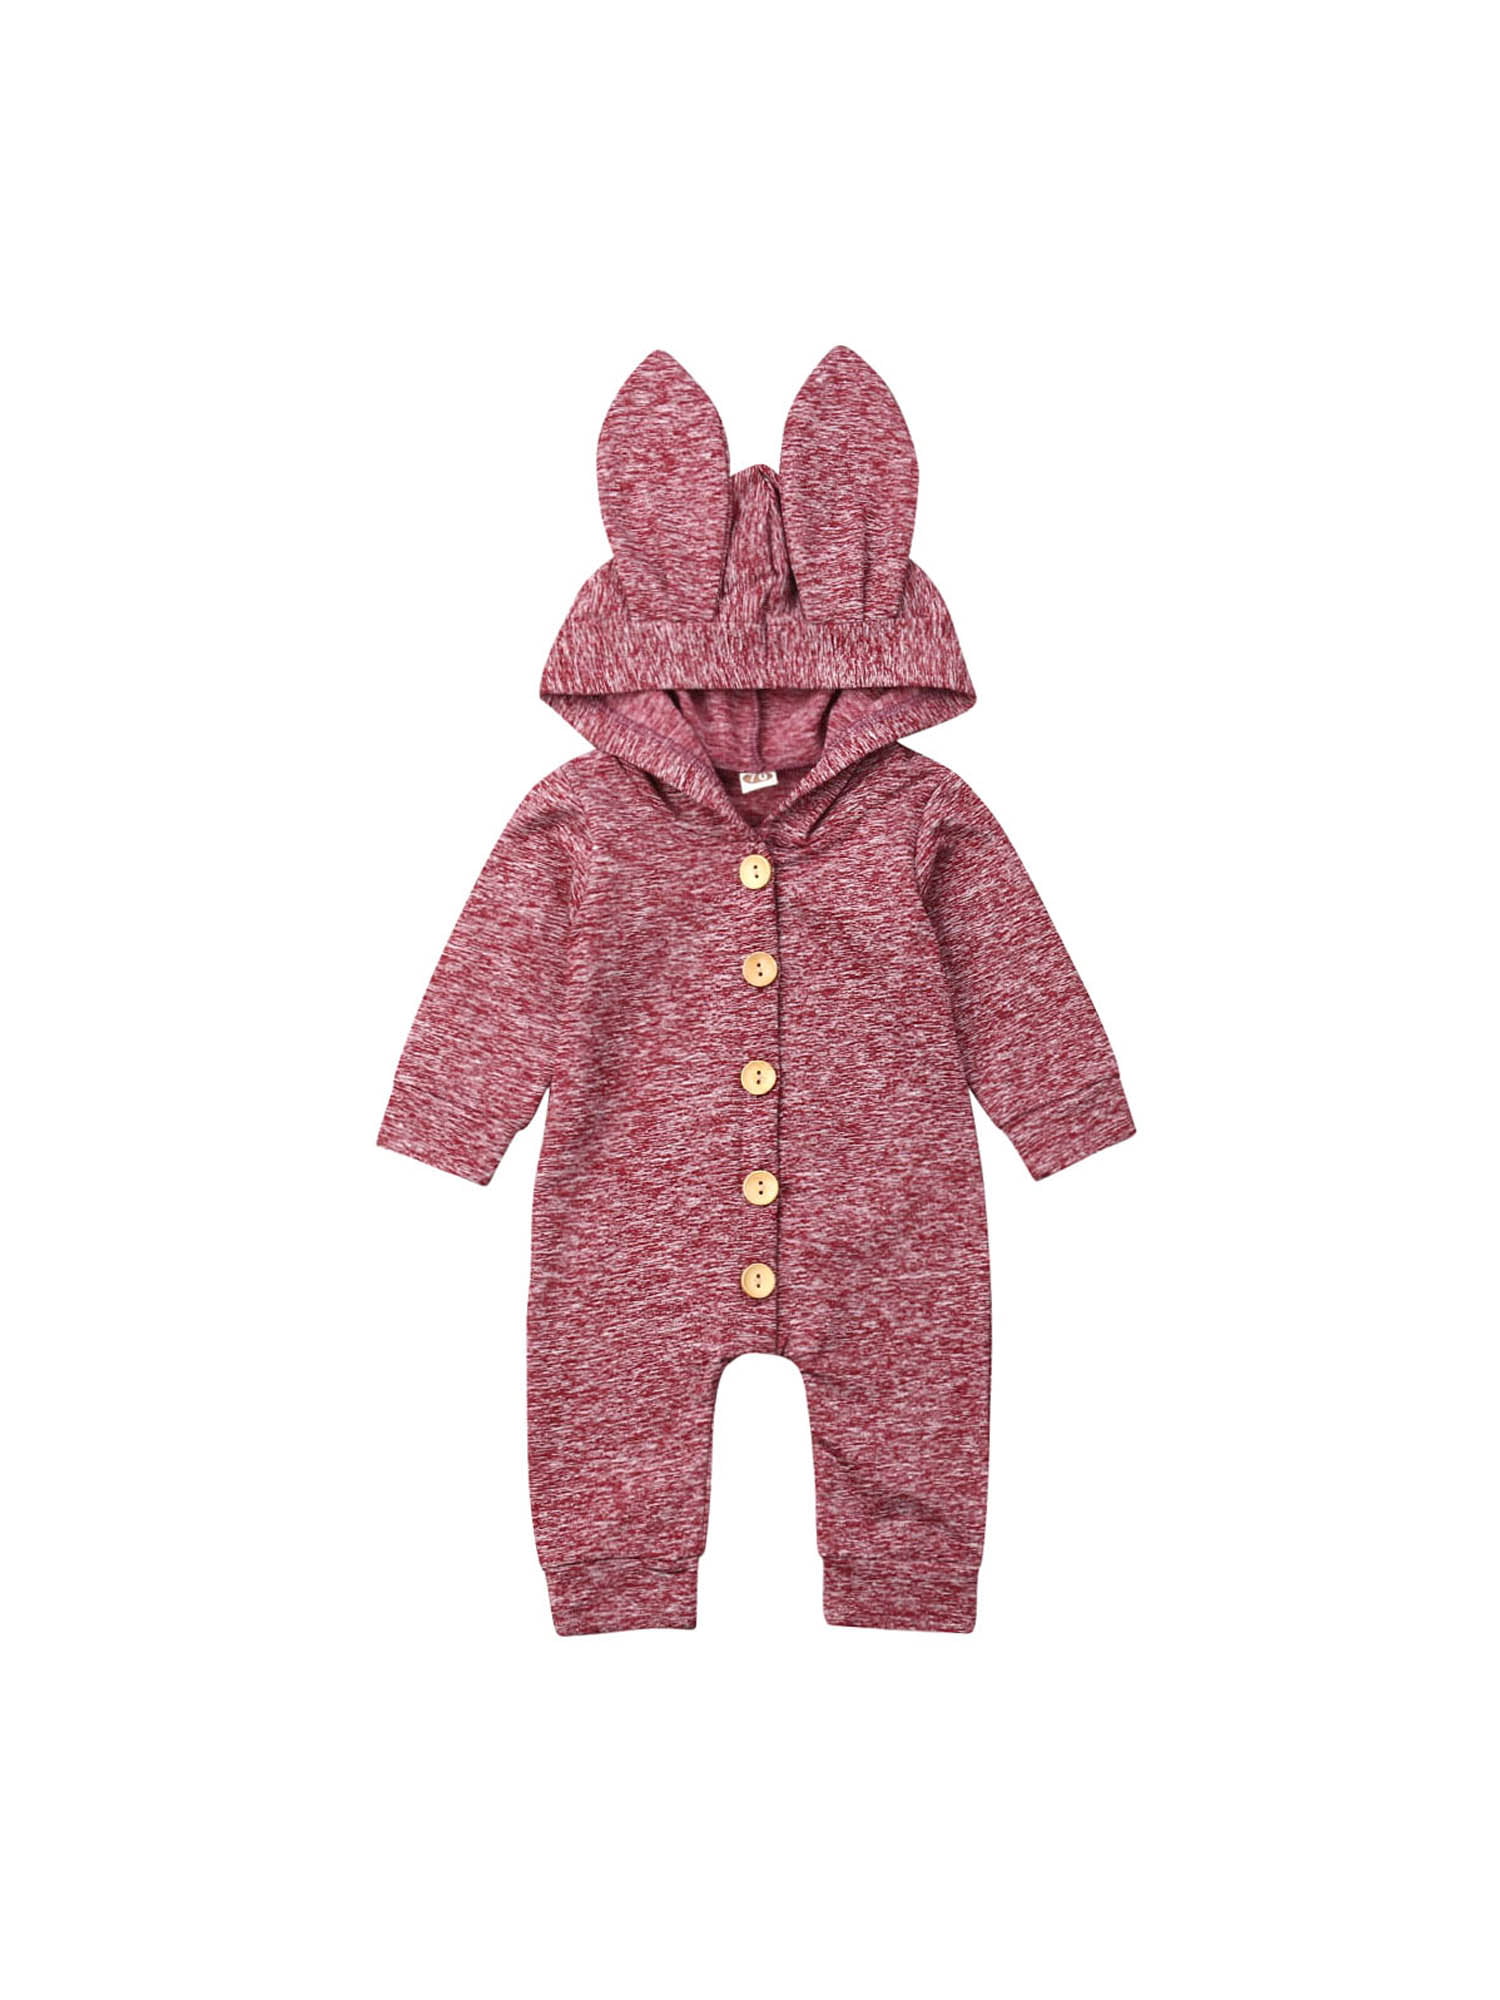 Baby Outfits Clothes Infant Boy Girl 3D Ear Romper Jumpsuit Playsuit Sets 0-24M 